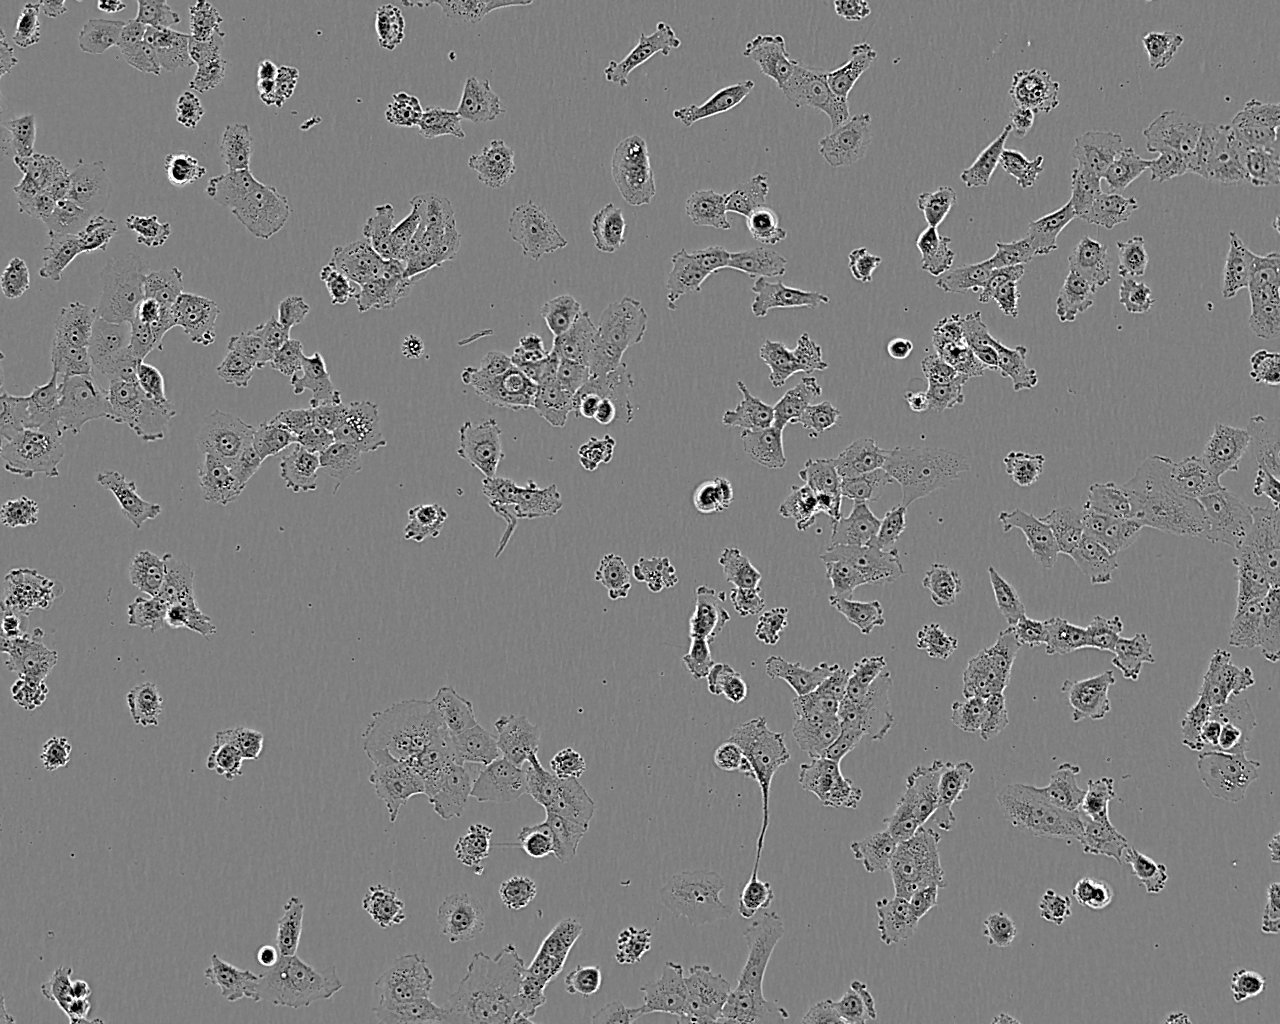 COLO 741 epithelioid cells人直肠癌细胞系